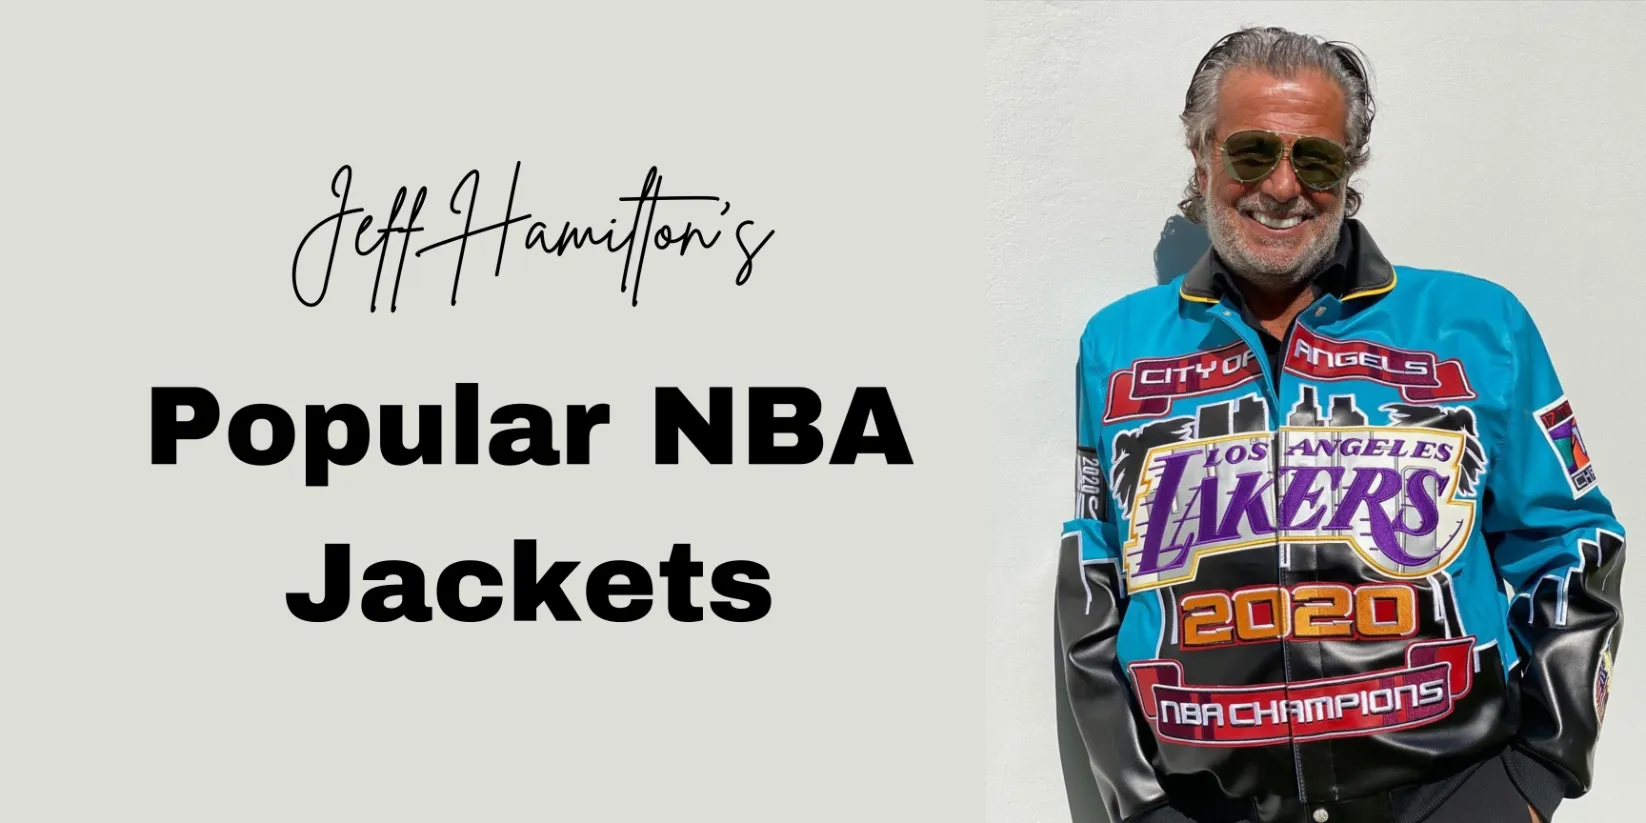 2002 XXL LA Lakers Jeff Hamilton 3peat NBA Champ Leather Jacket Kobe Signed  NEW